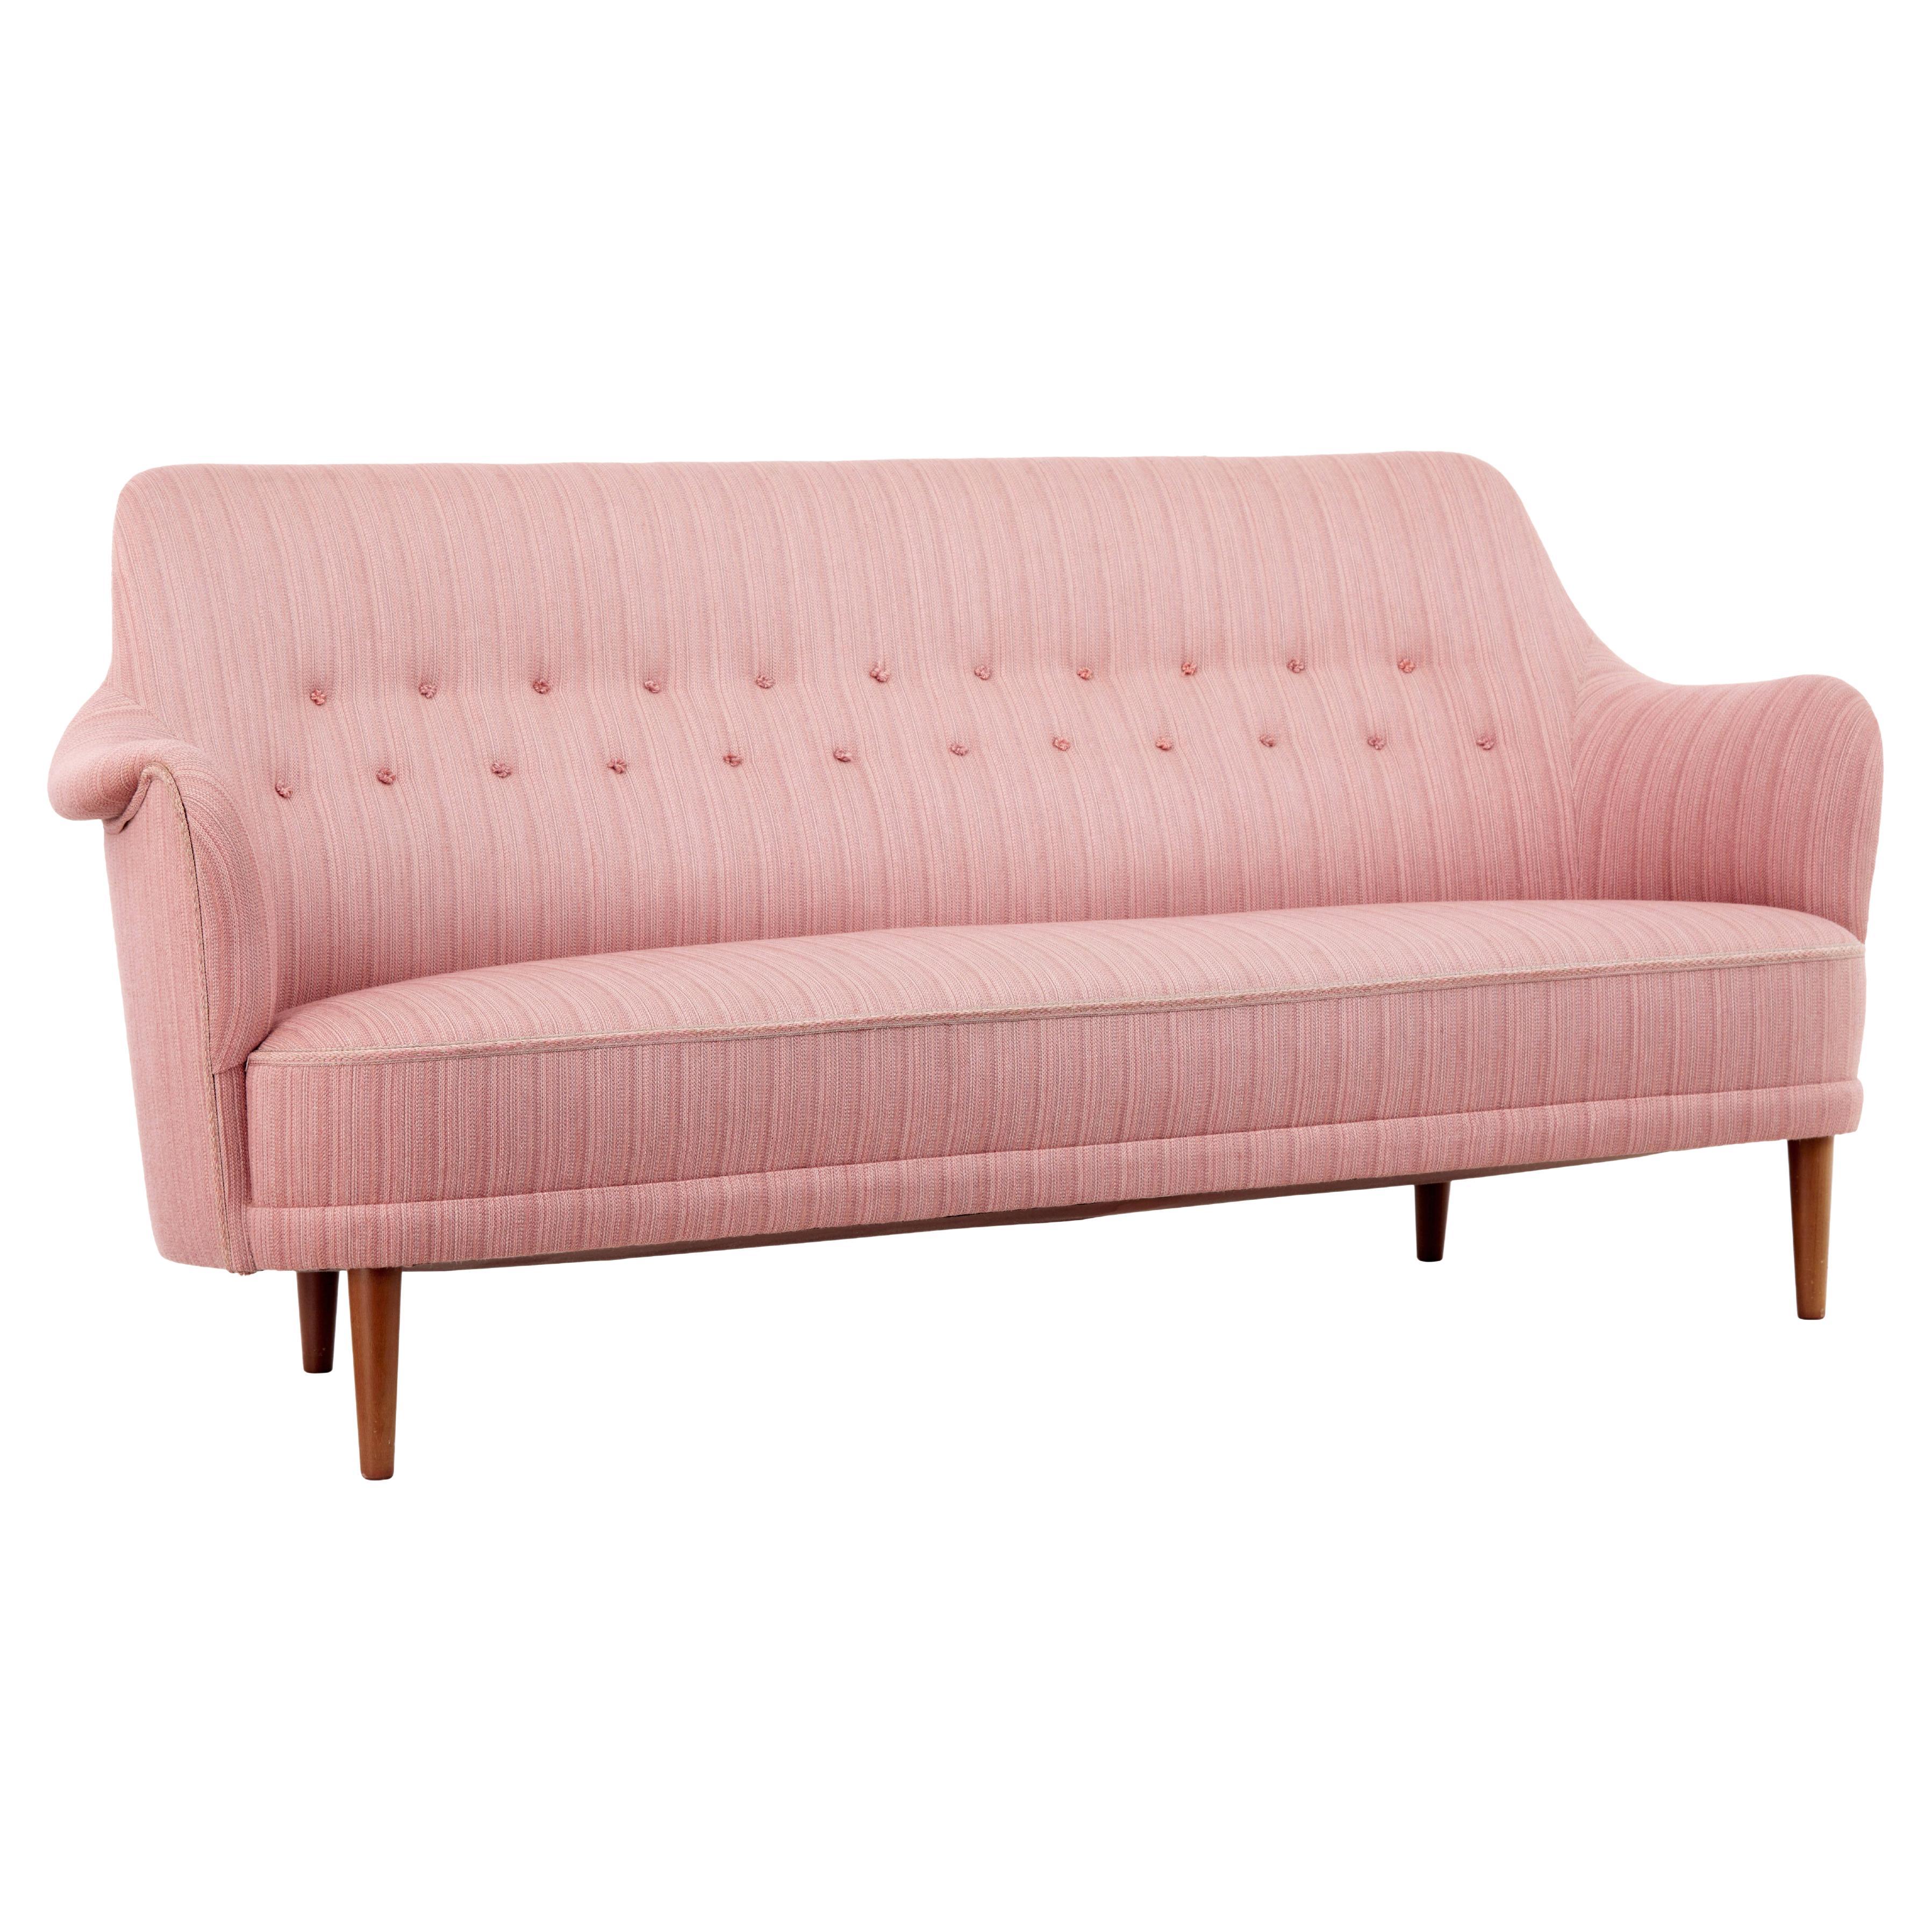 Mid 20th century samsa rund triple sofa by Carl Malmsten